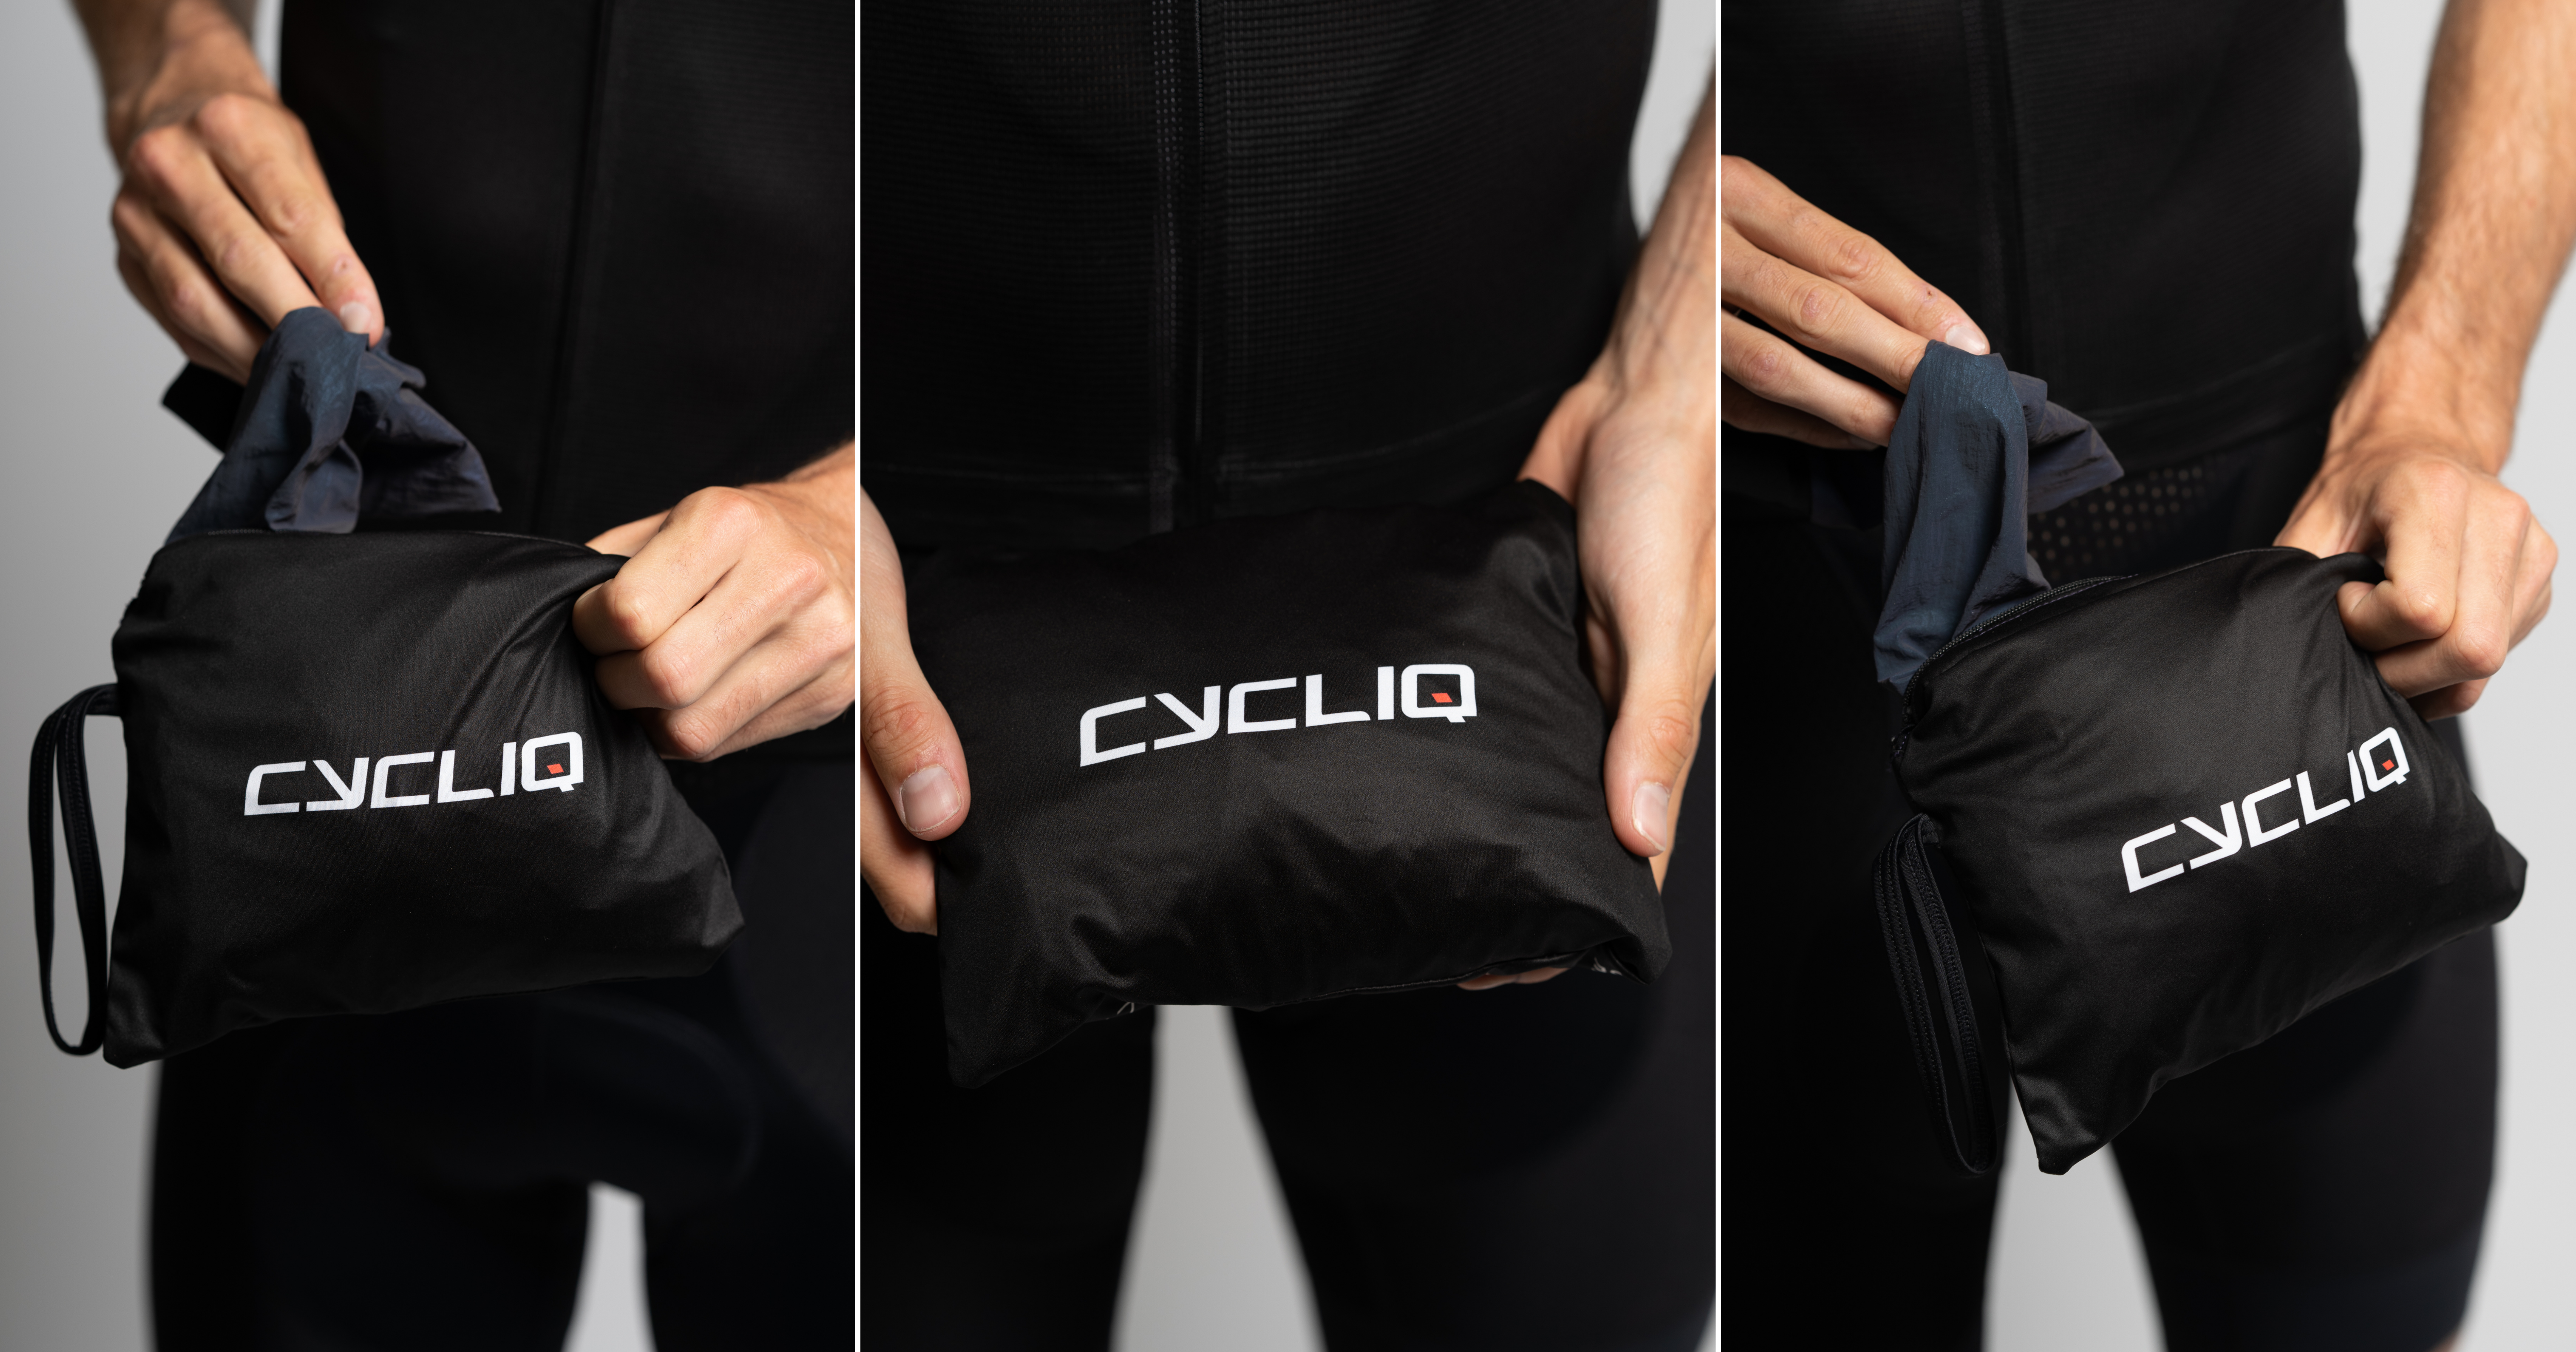 Cycliq Lumiere Jacket Details